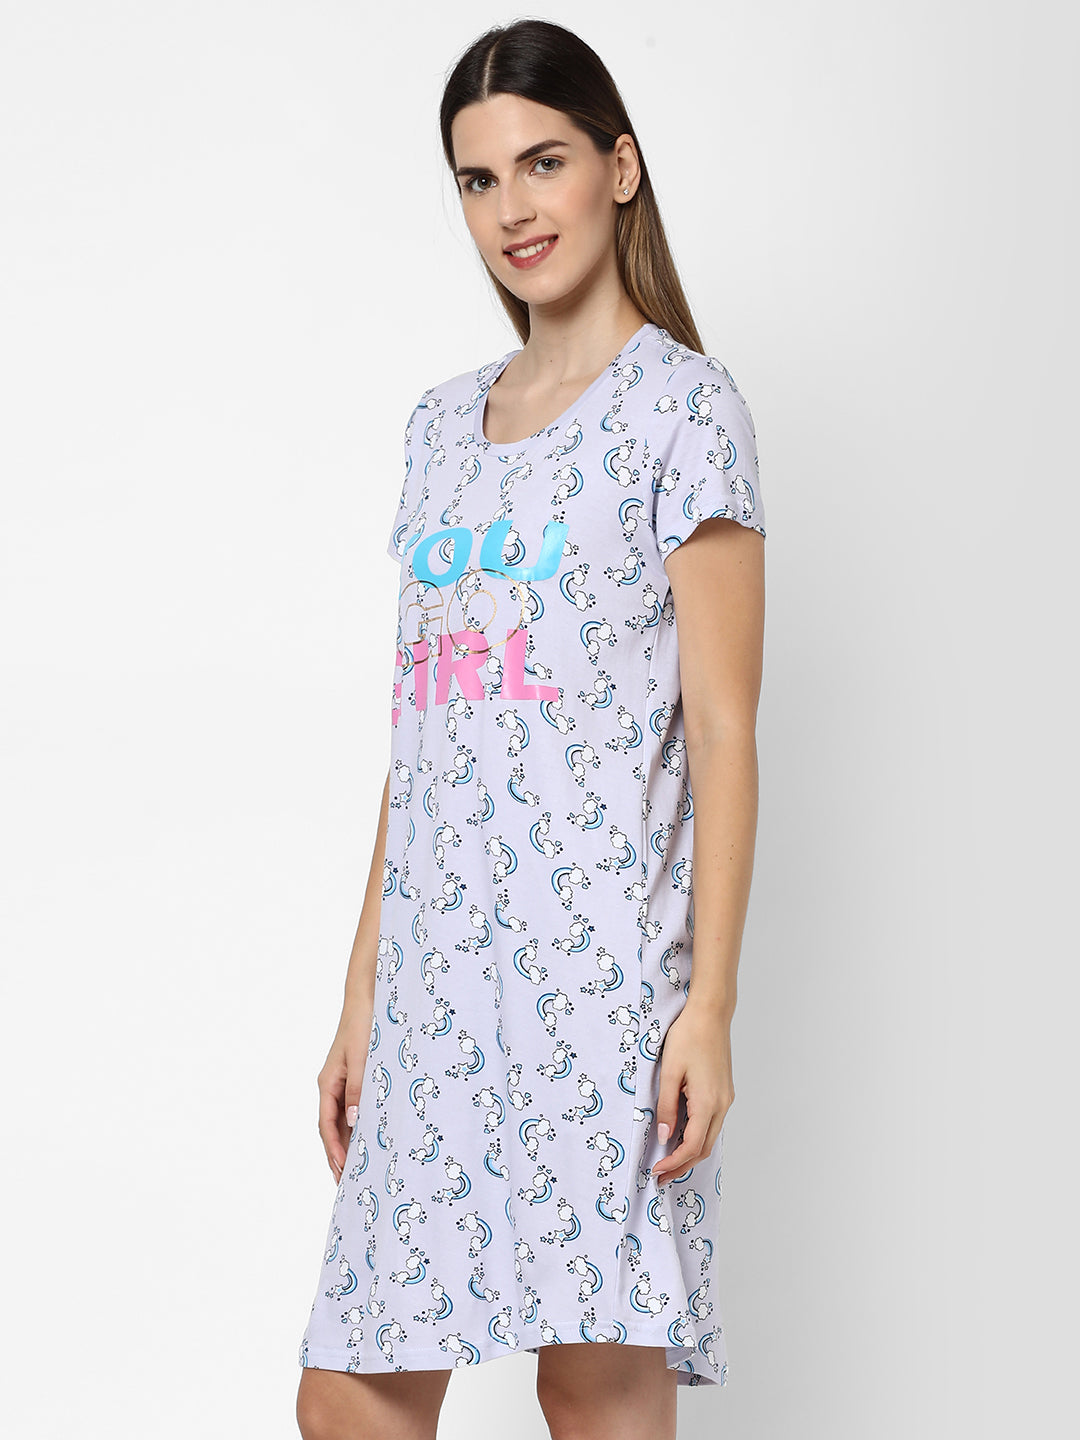 evolove women's rainow print with you go girl printed knee length nightgown/short nighty/longpolo, 100% cotton, super soft, trendy design